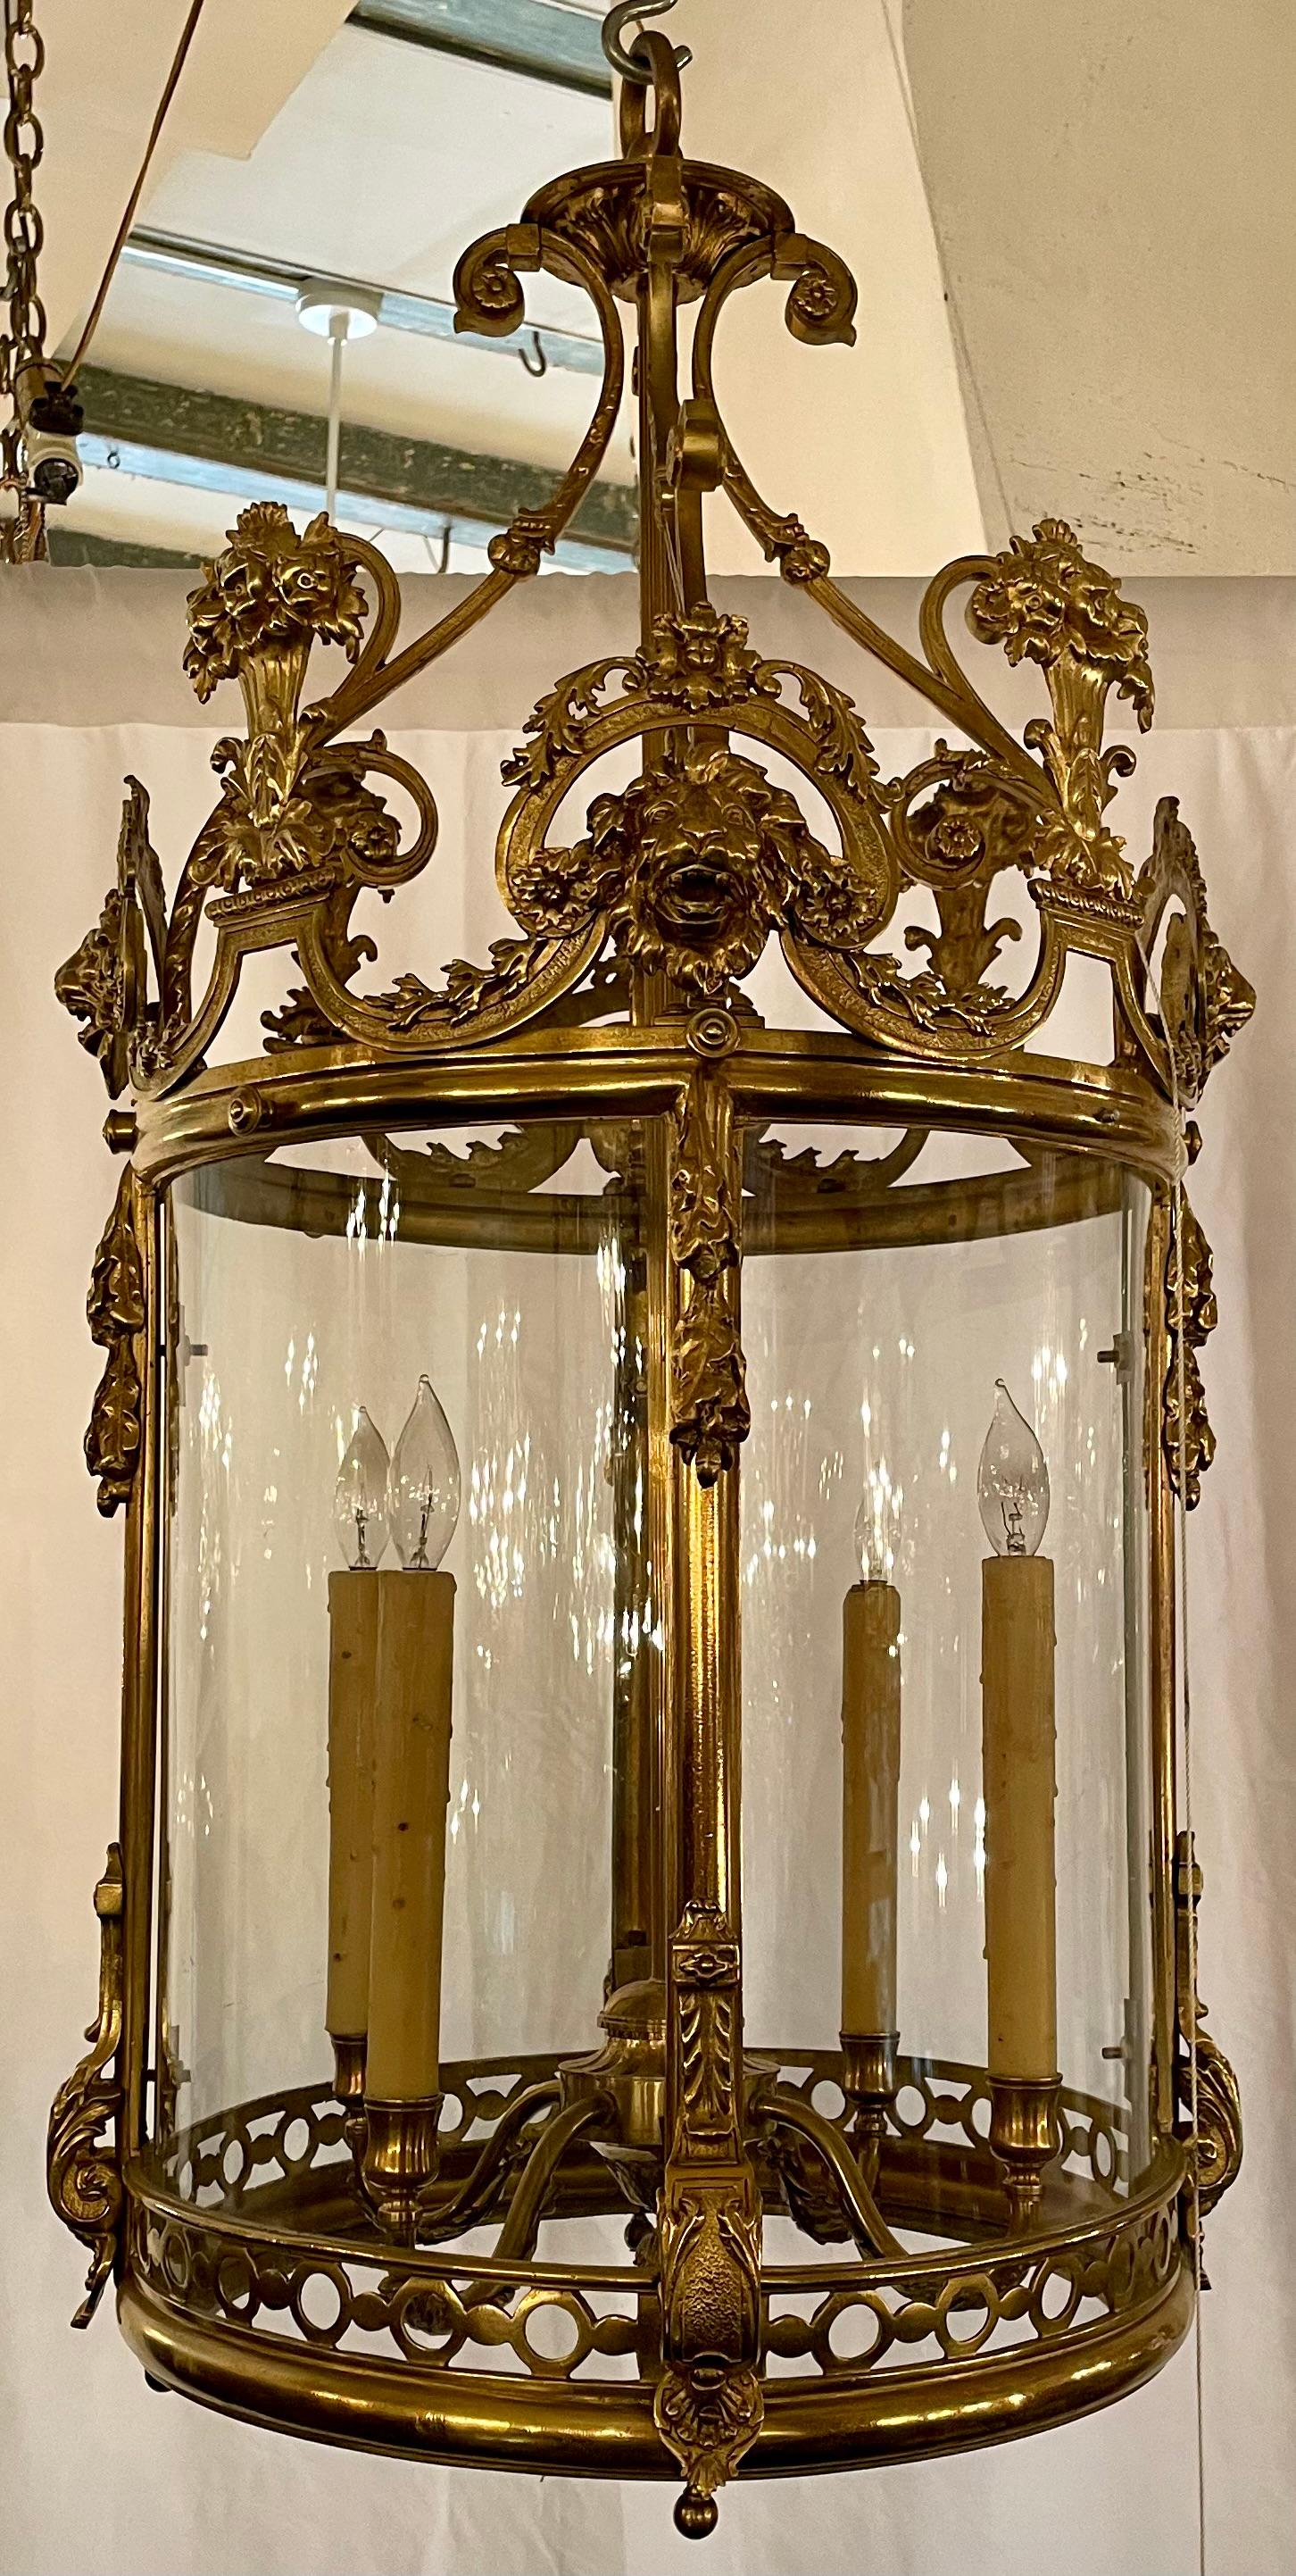 Antique English regency era gold bronze 4-light chateau lantern with lion masks & neo-classical urns, circa 1820's.